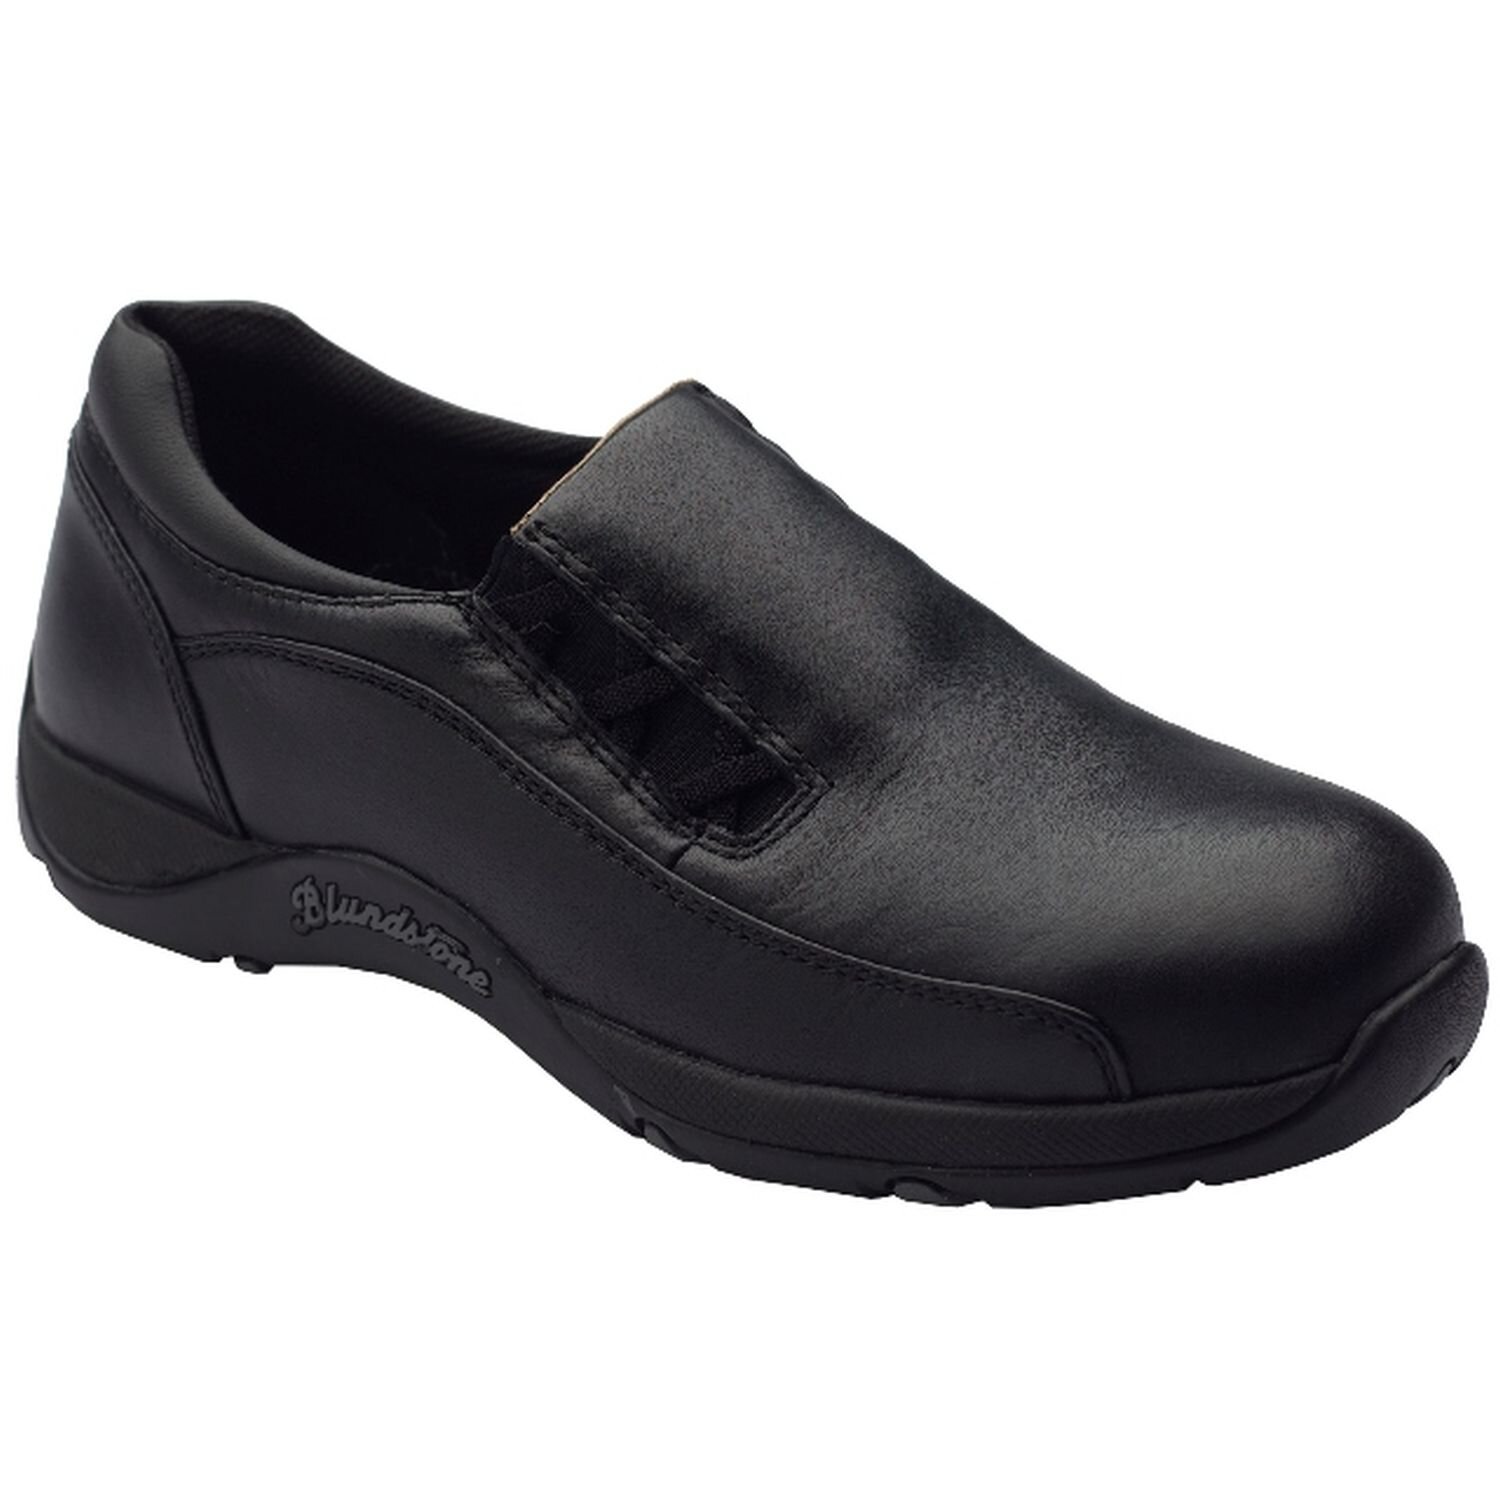 Blundstone 884 Women's Lace Up Jogger Safety Shoe Black